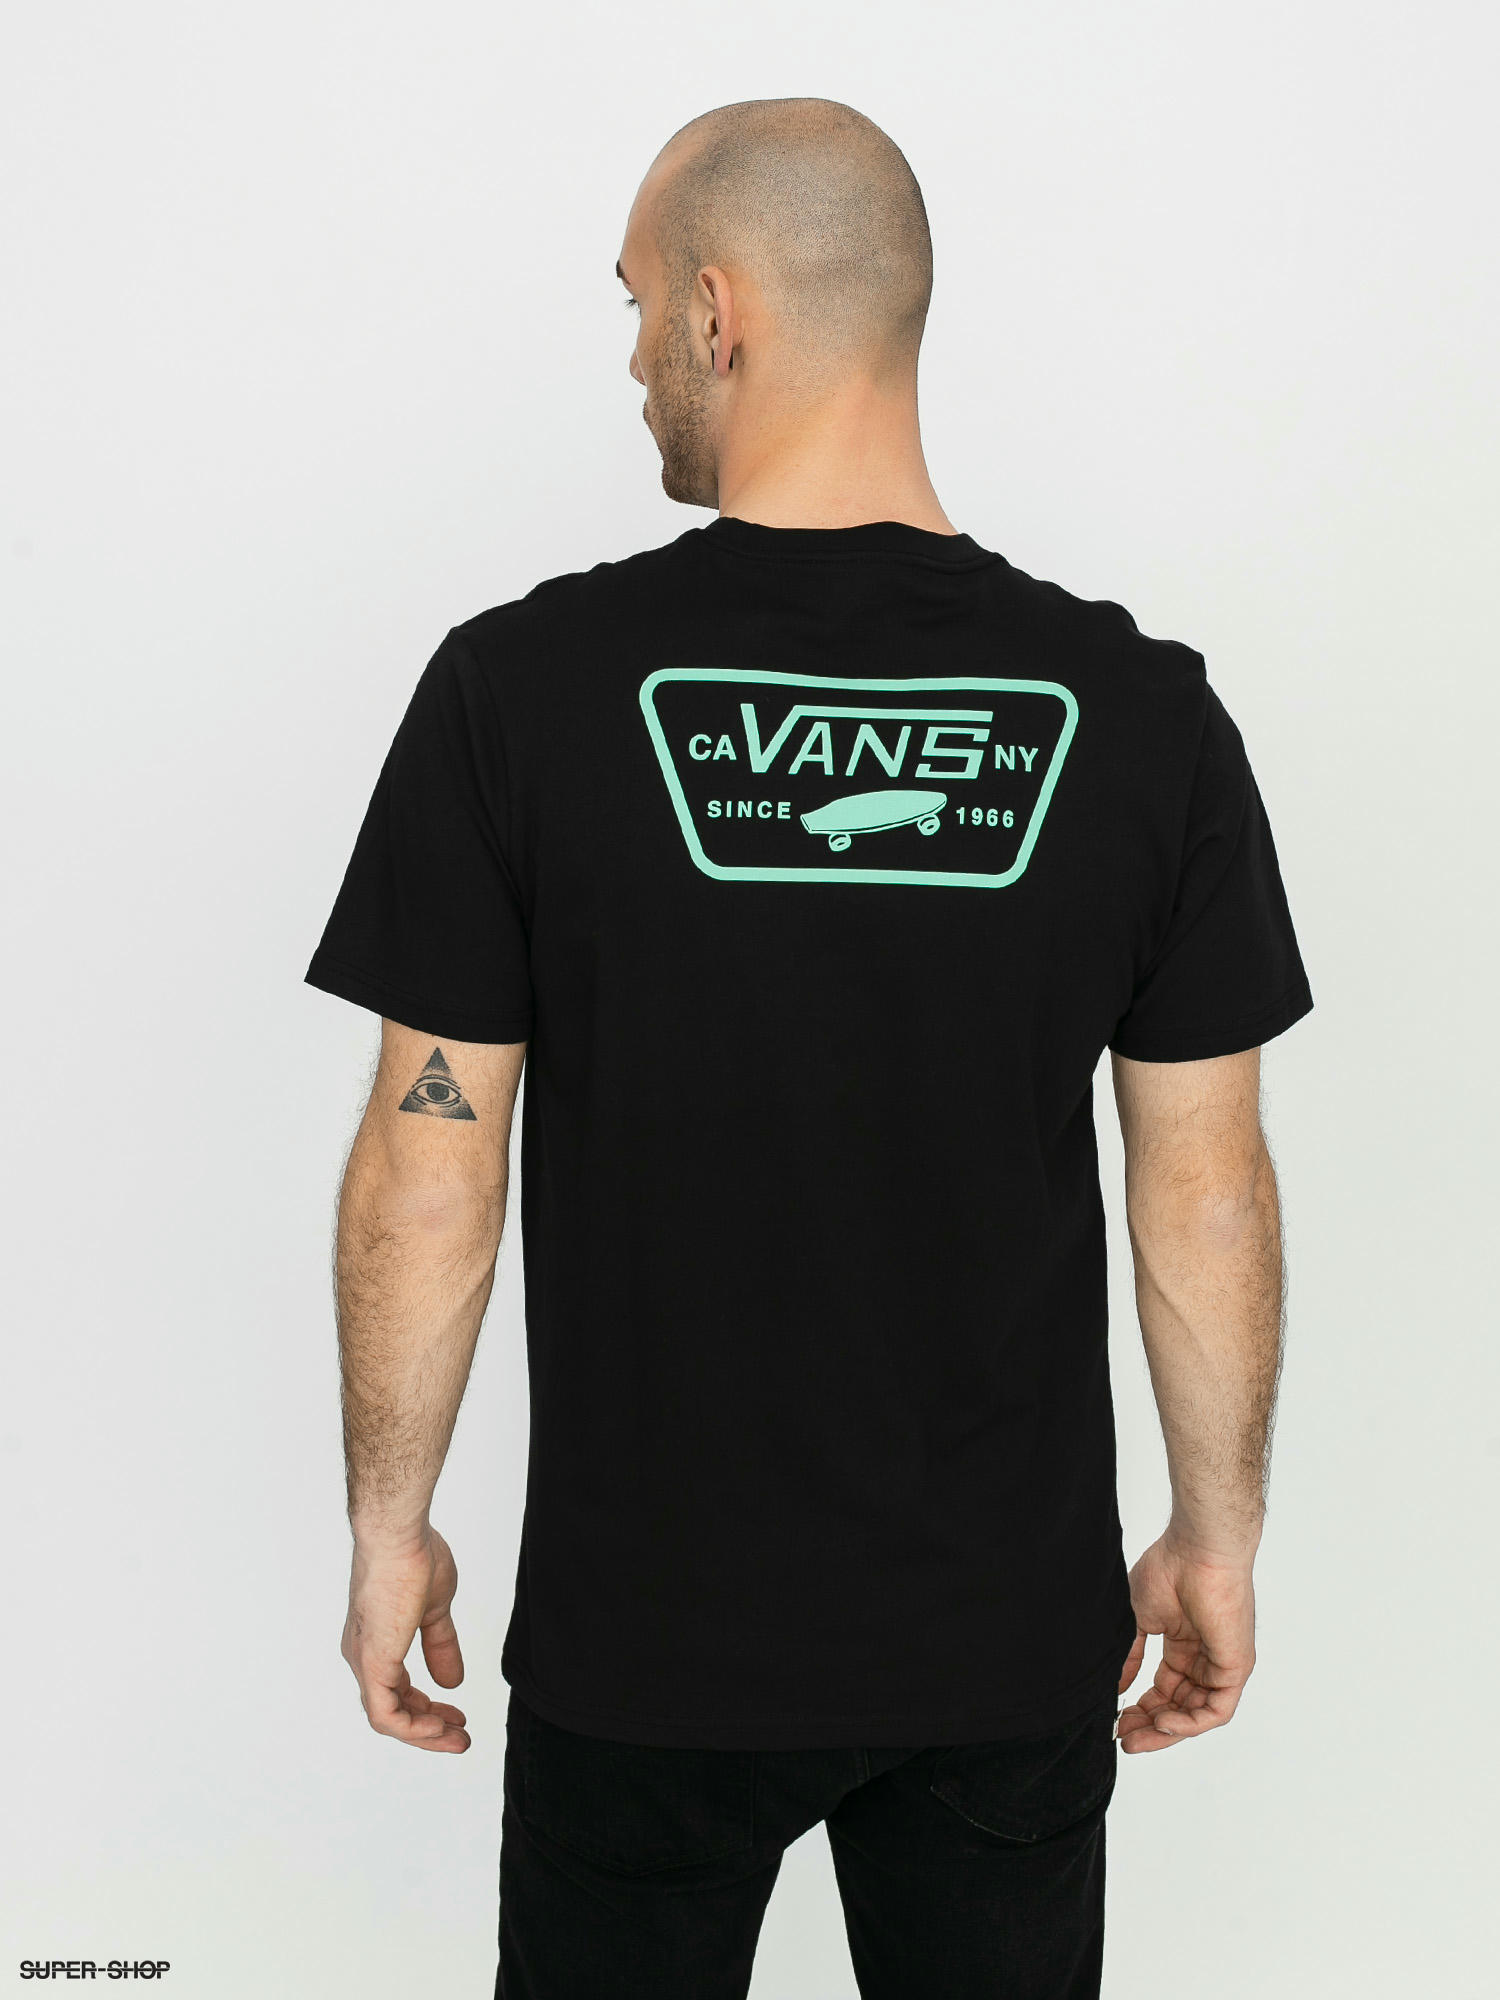 vans back print t shirt